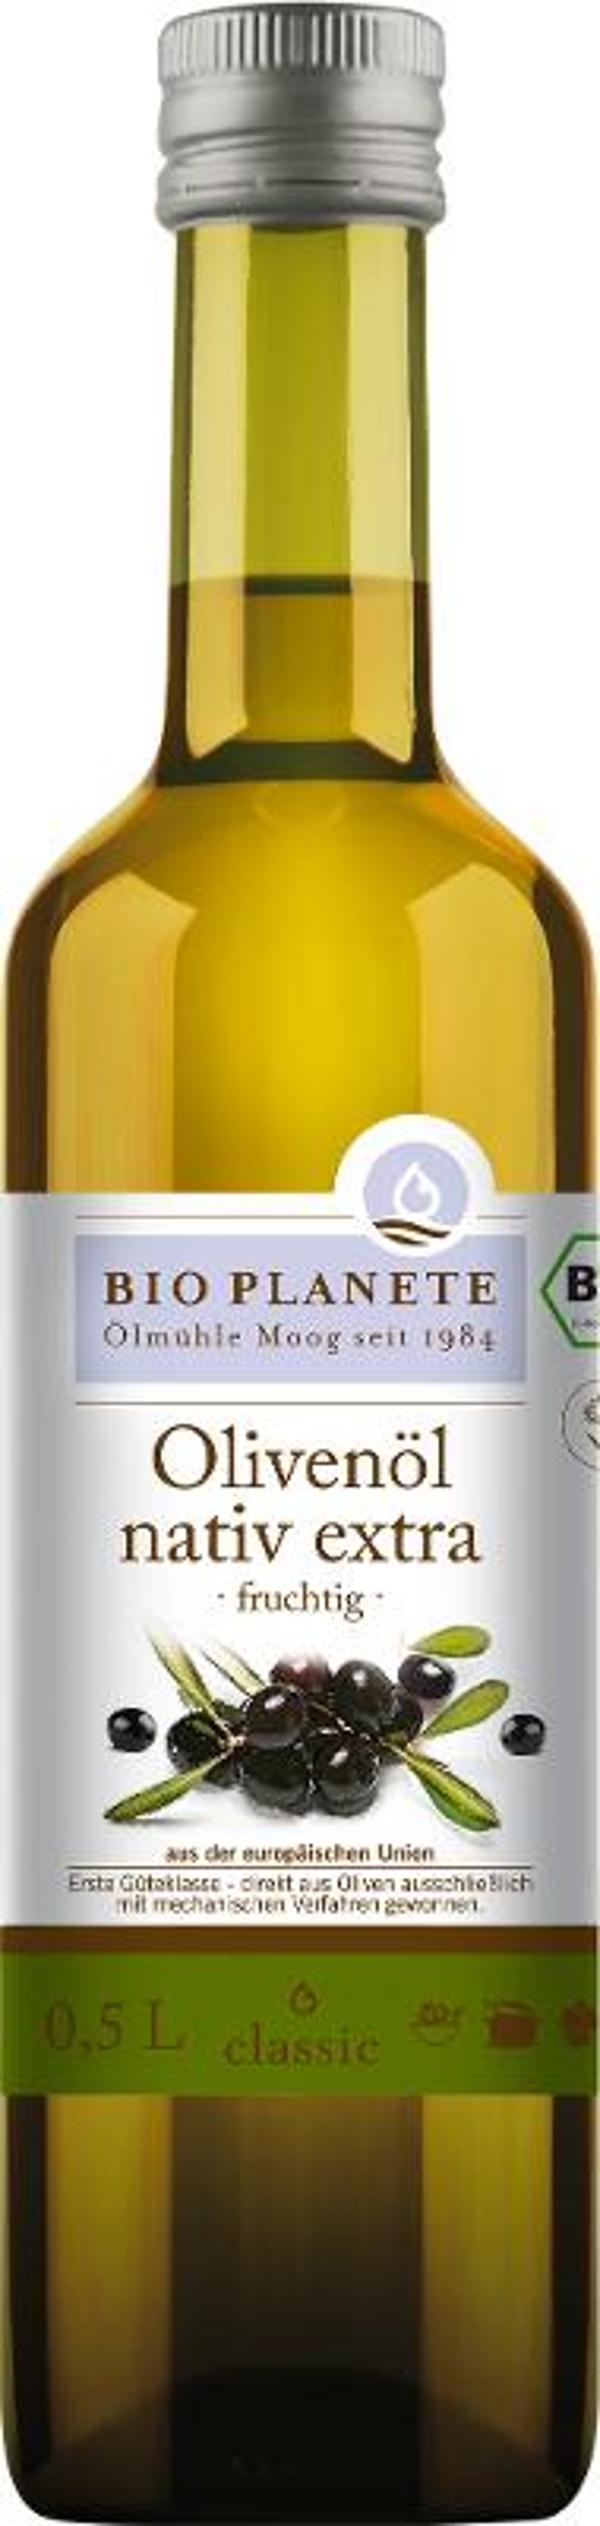 Produktfoto zu Olivenöl fruchtig 0,5l